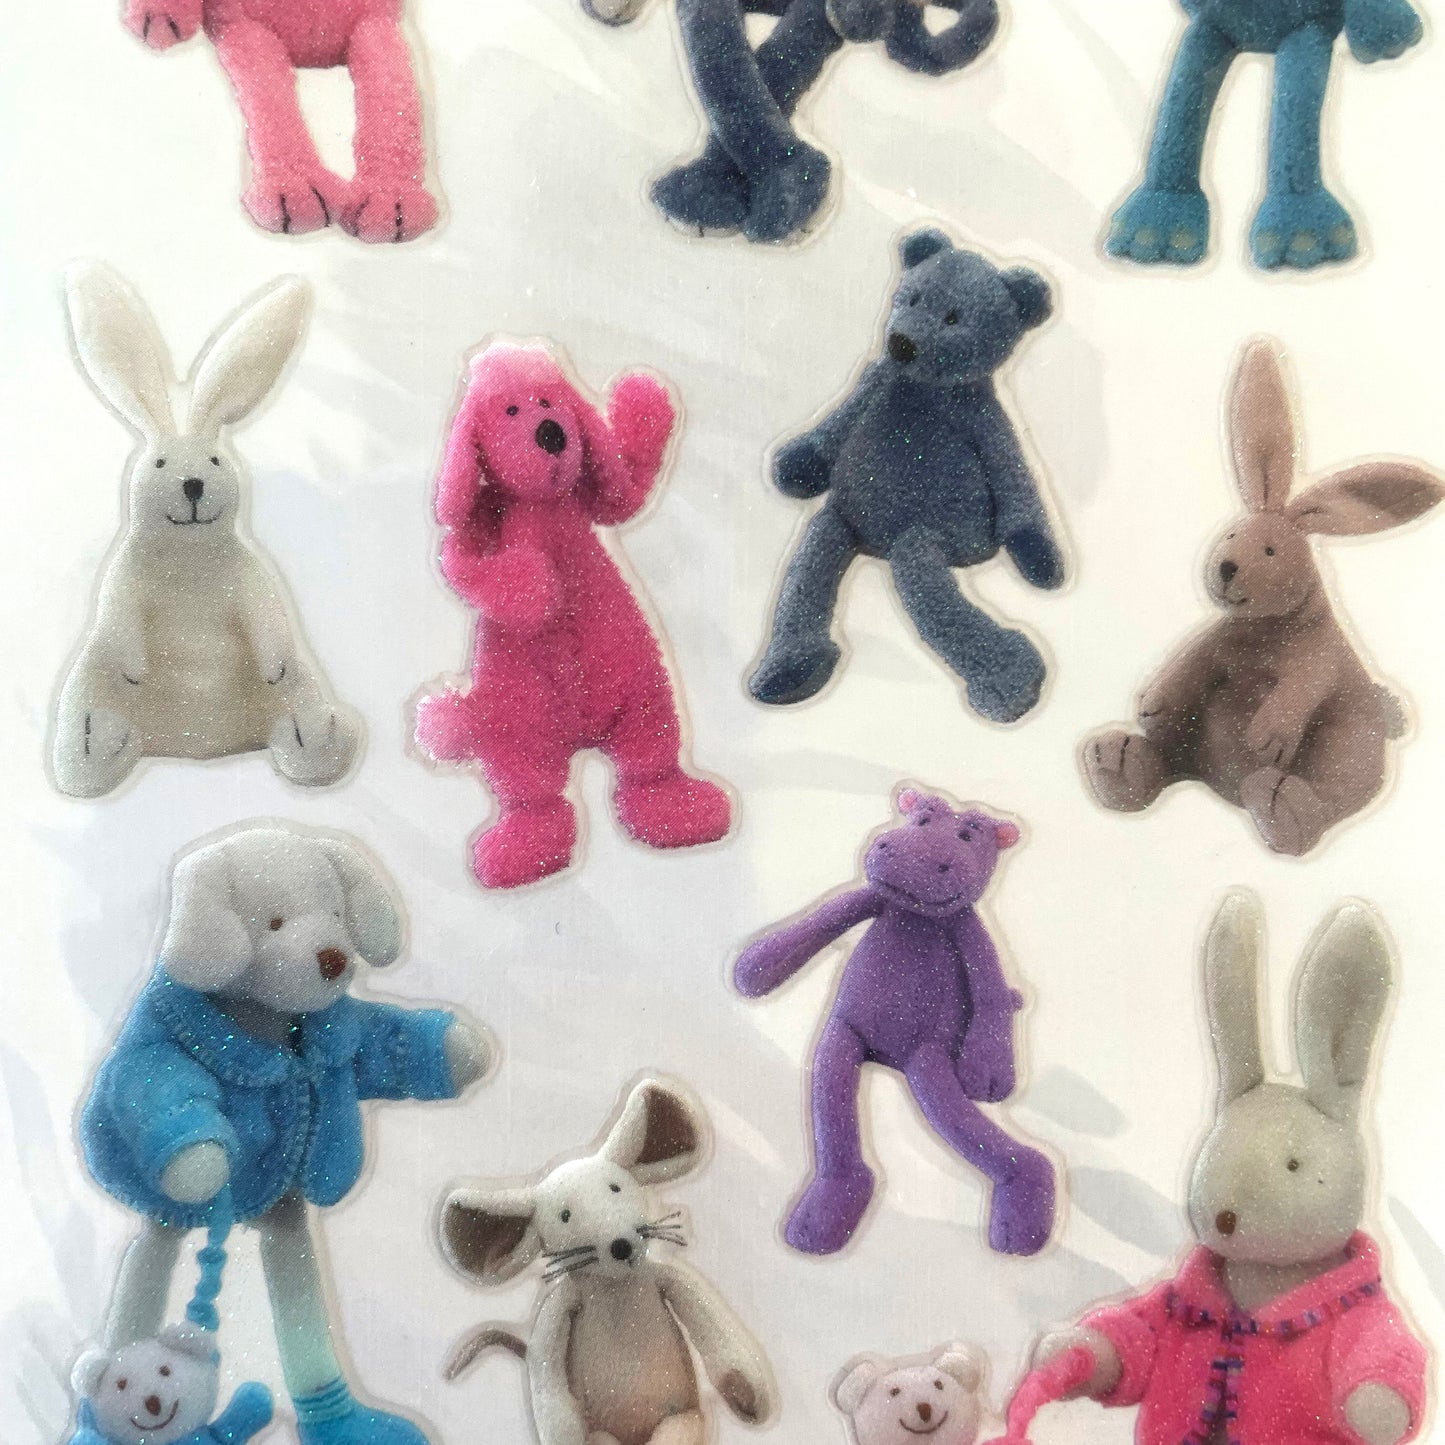 Violette: GEMS Stuffed Animal Stickers